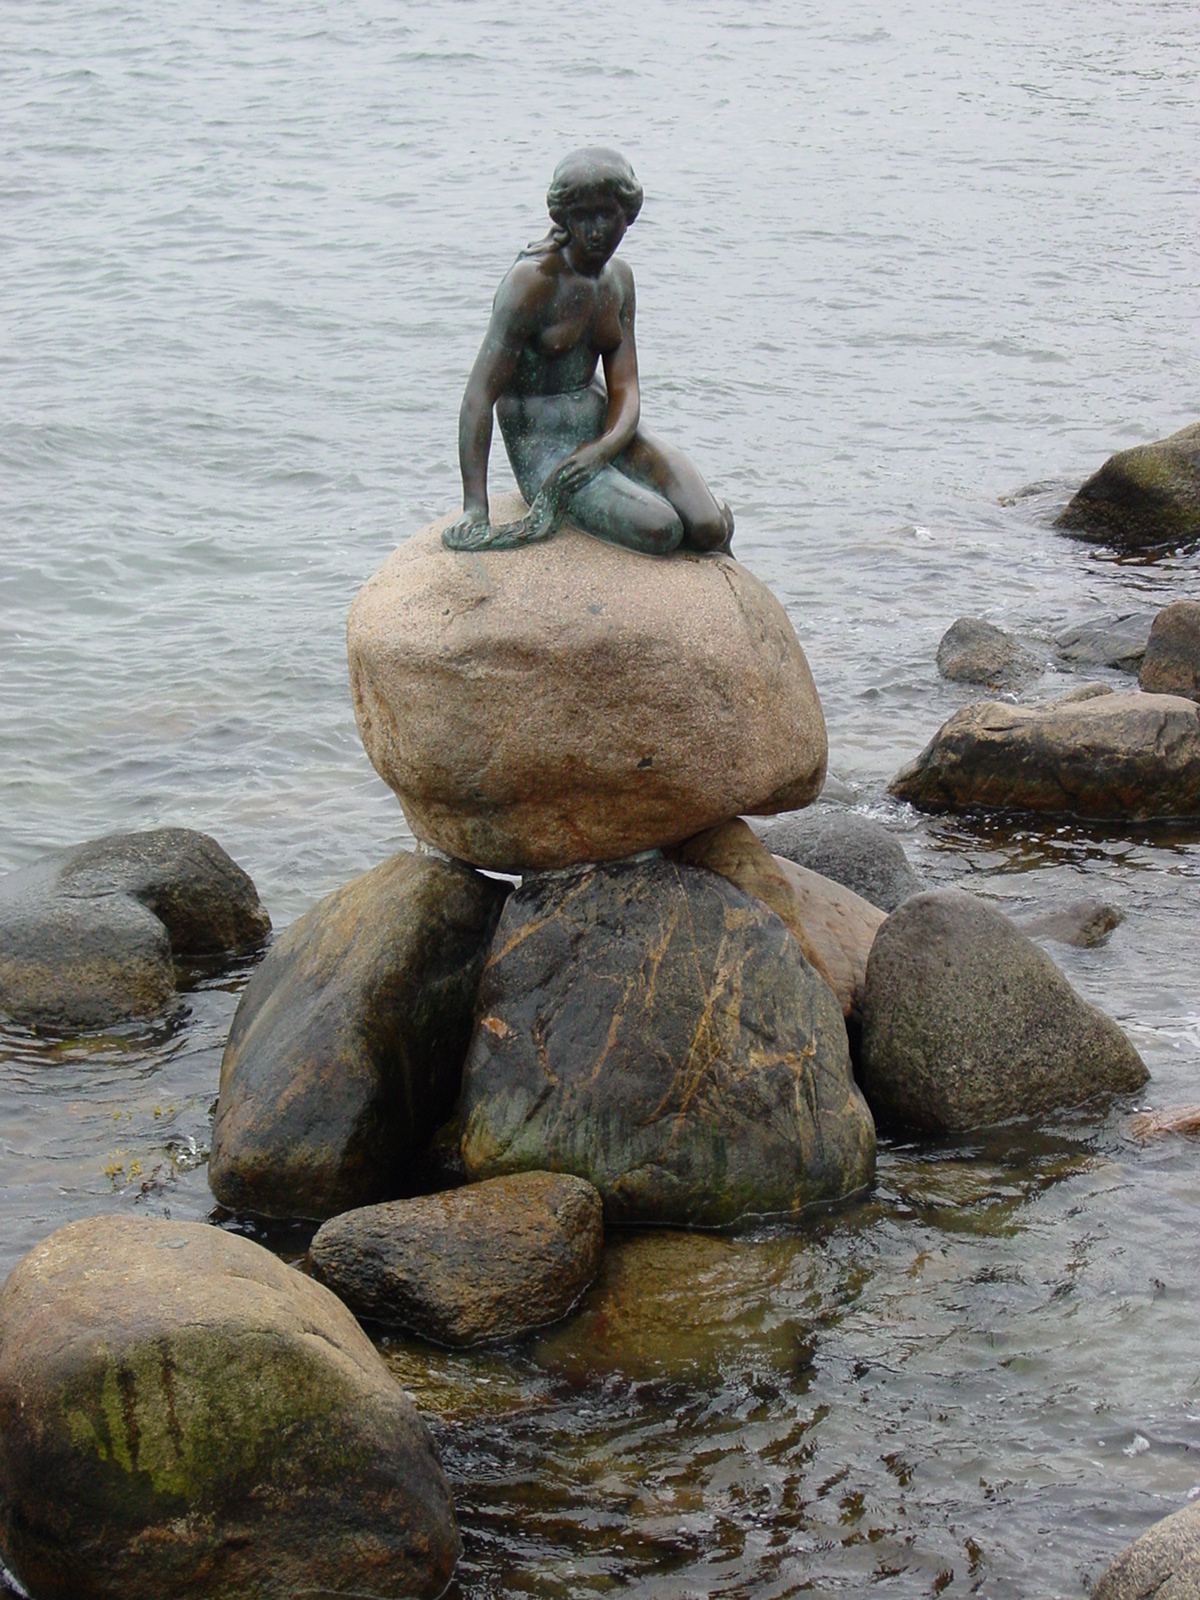 The Little Mermaid statue in Copenhagen